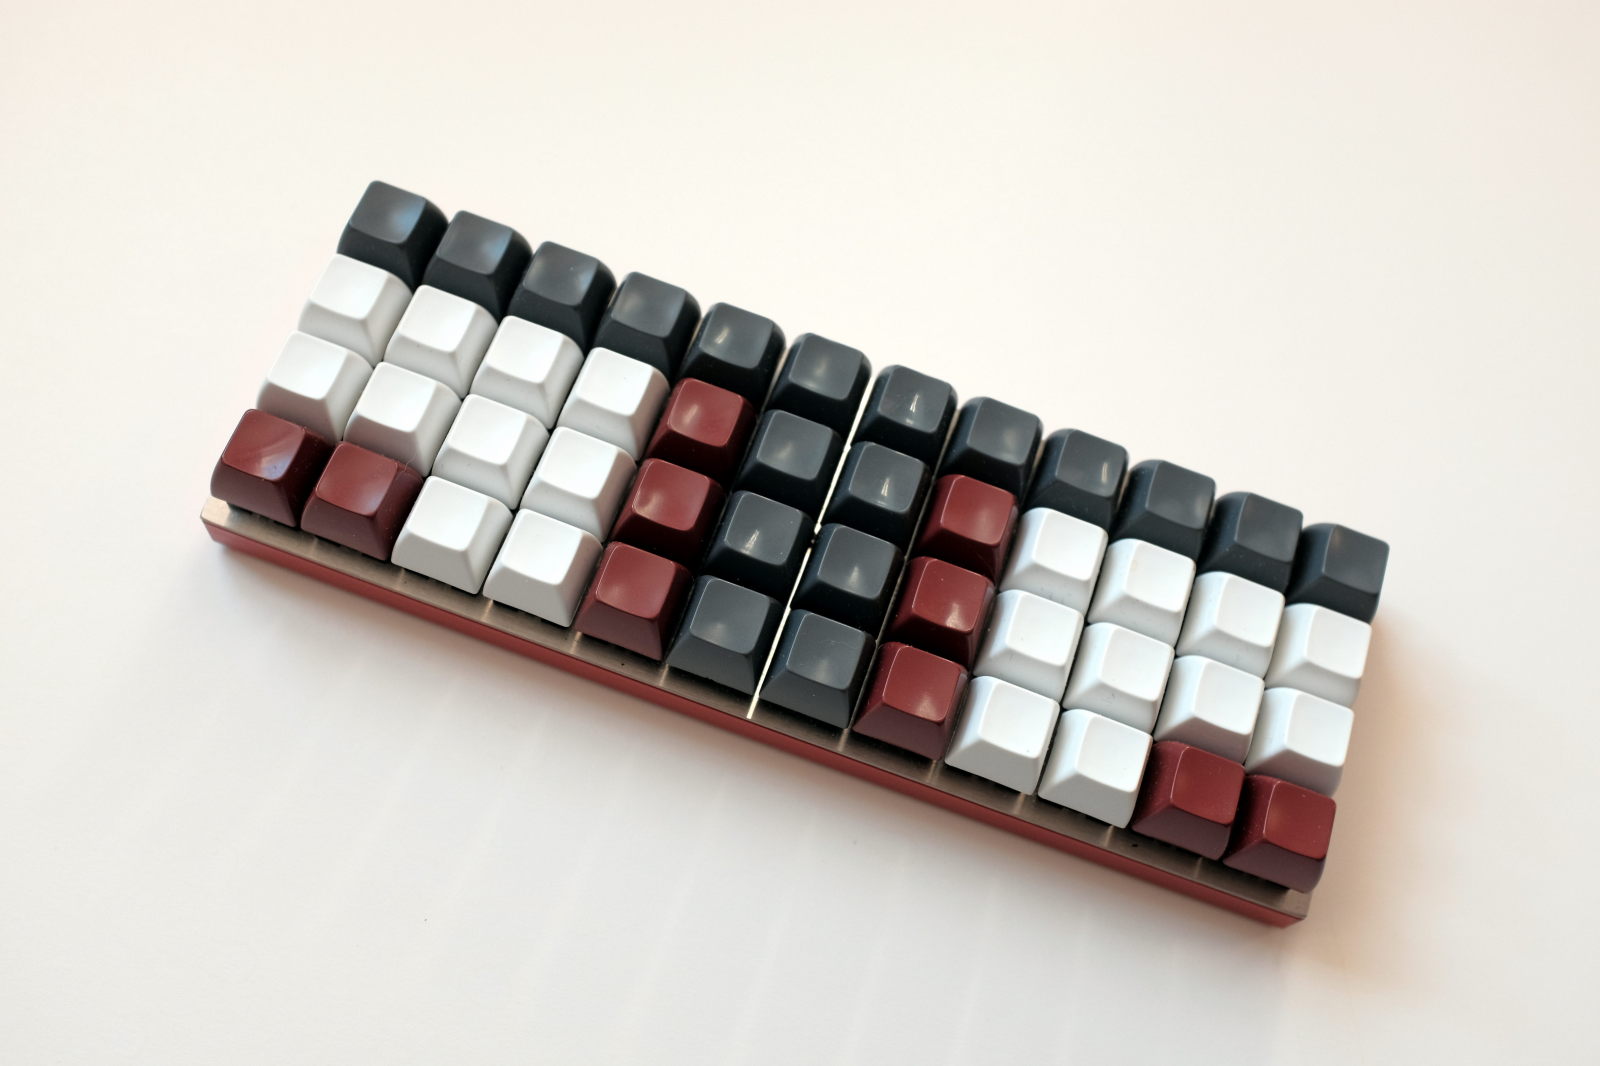 Wide Planck keyboard